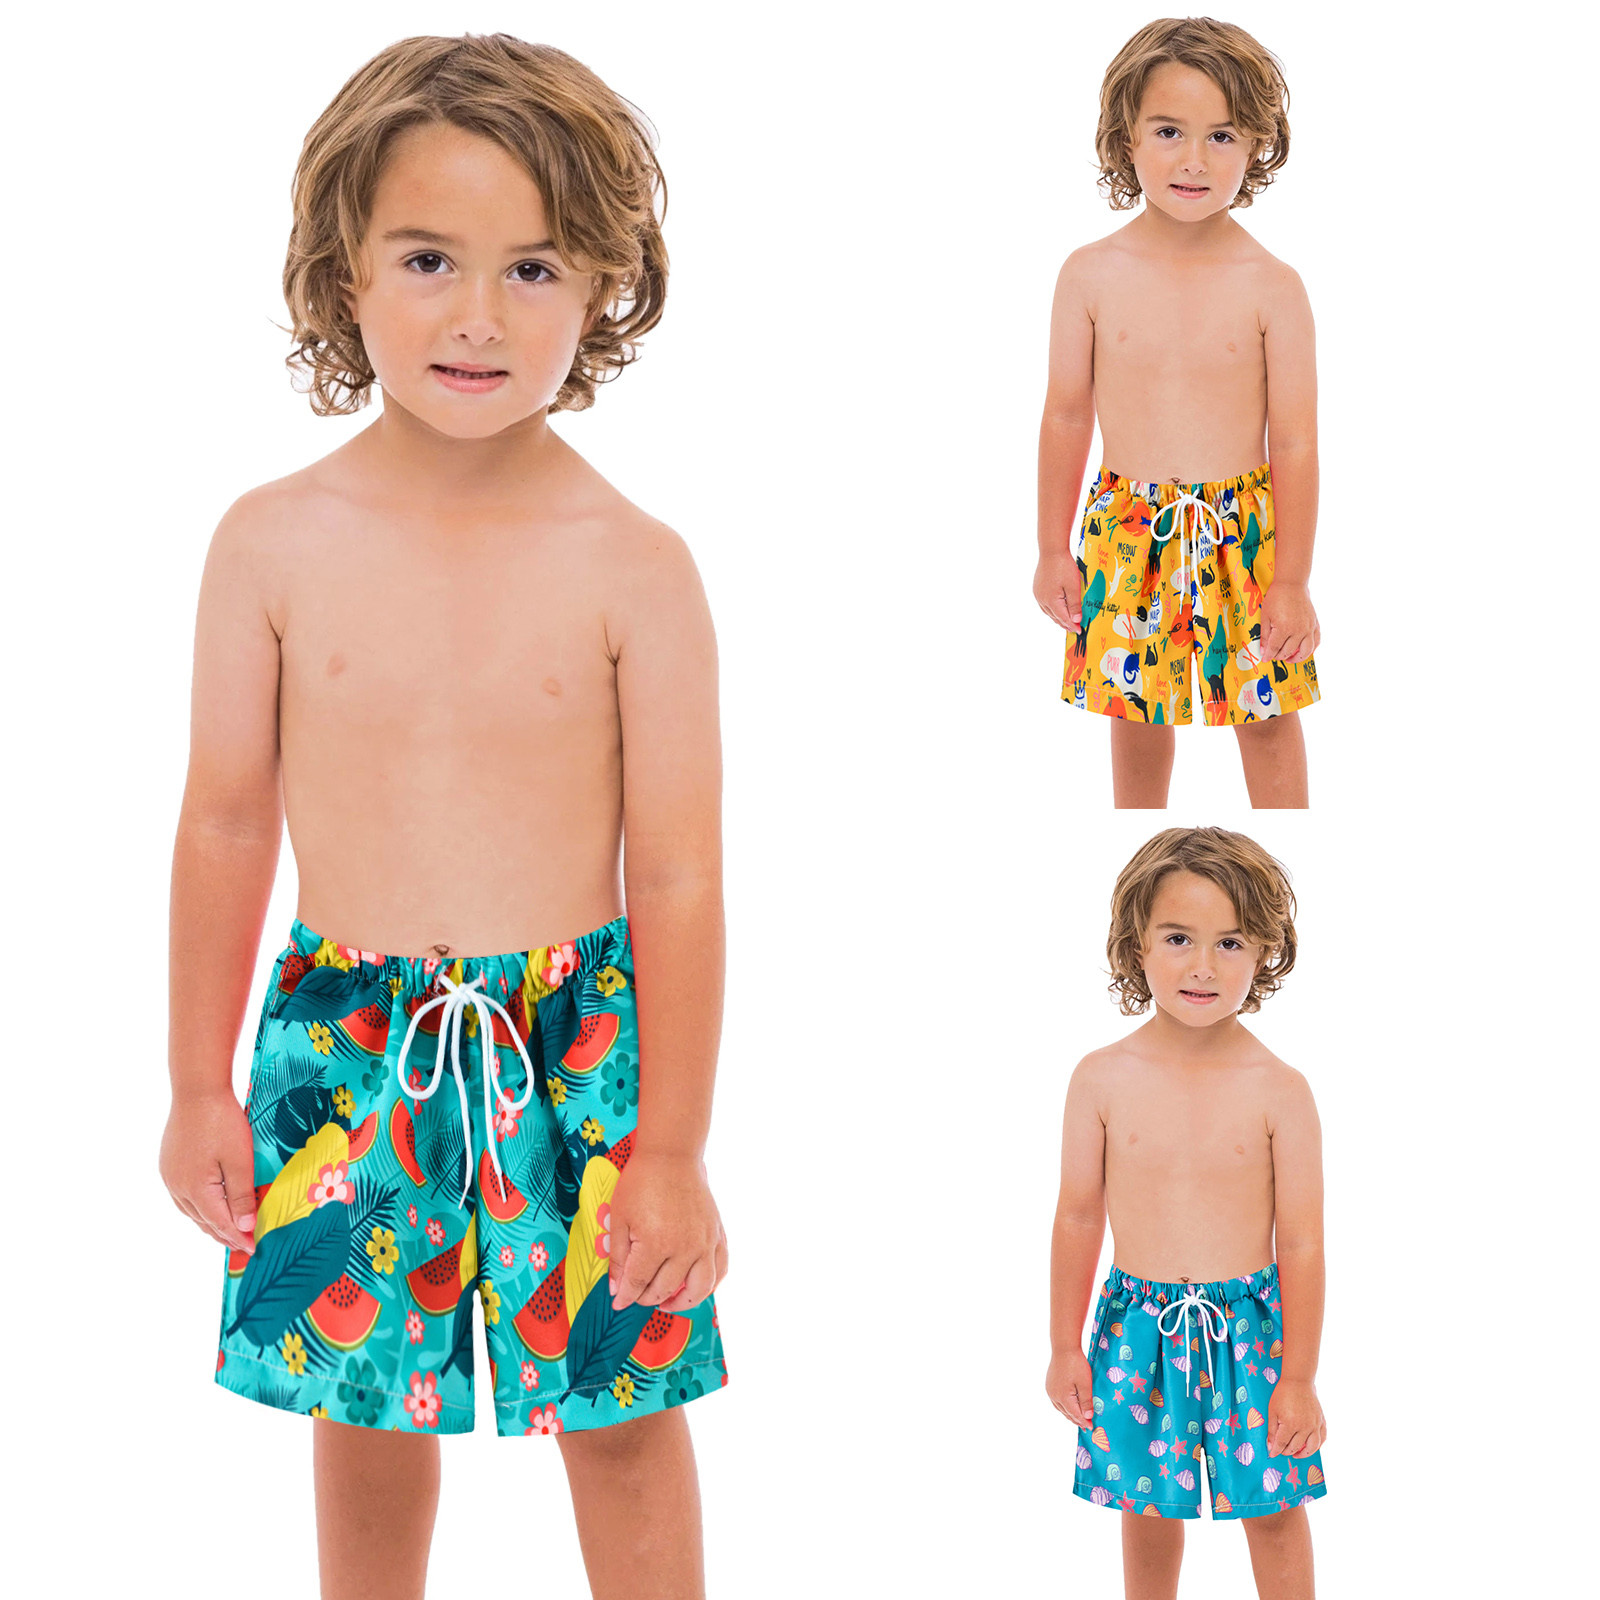 Toddler Swim Trunks 4t Baby Boys Swimming Swimsuit Infant Beach Suit